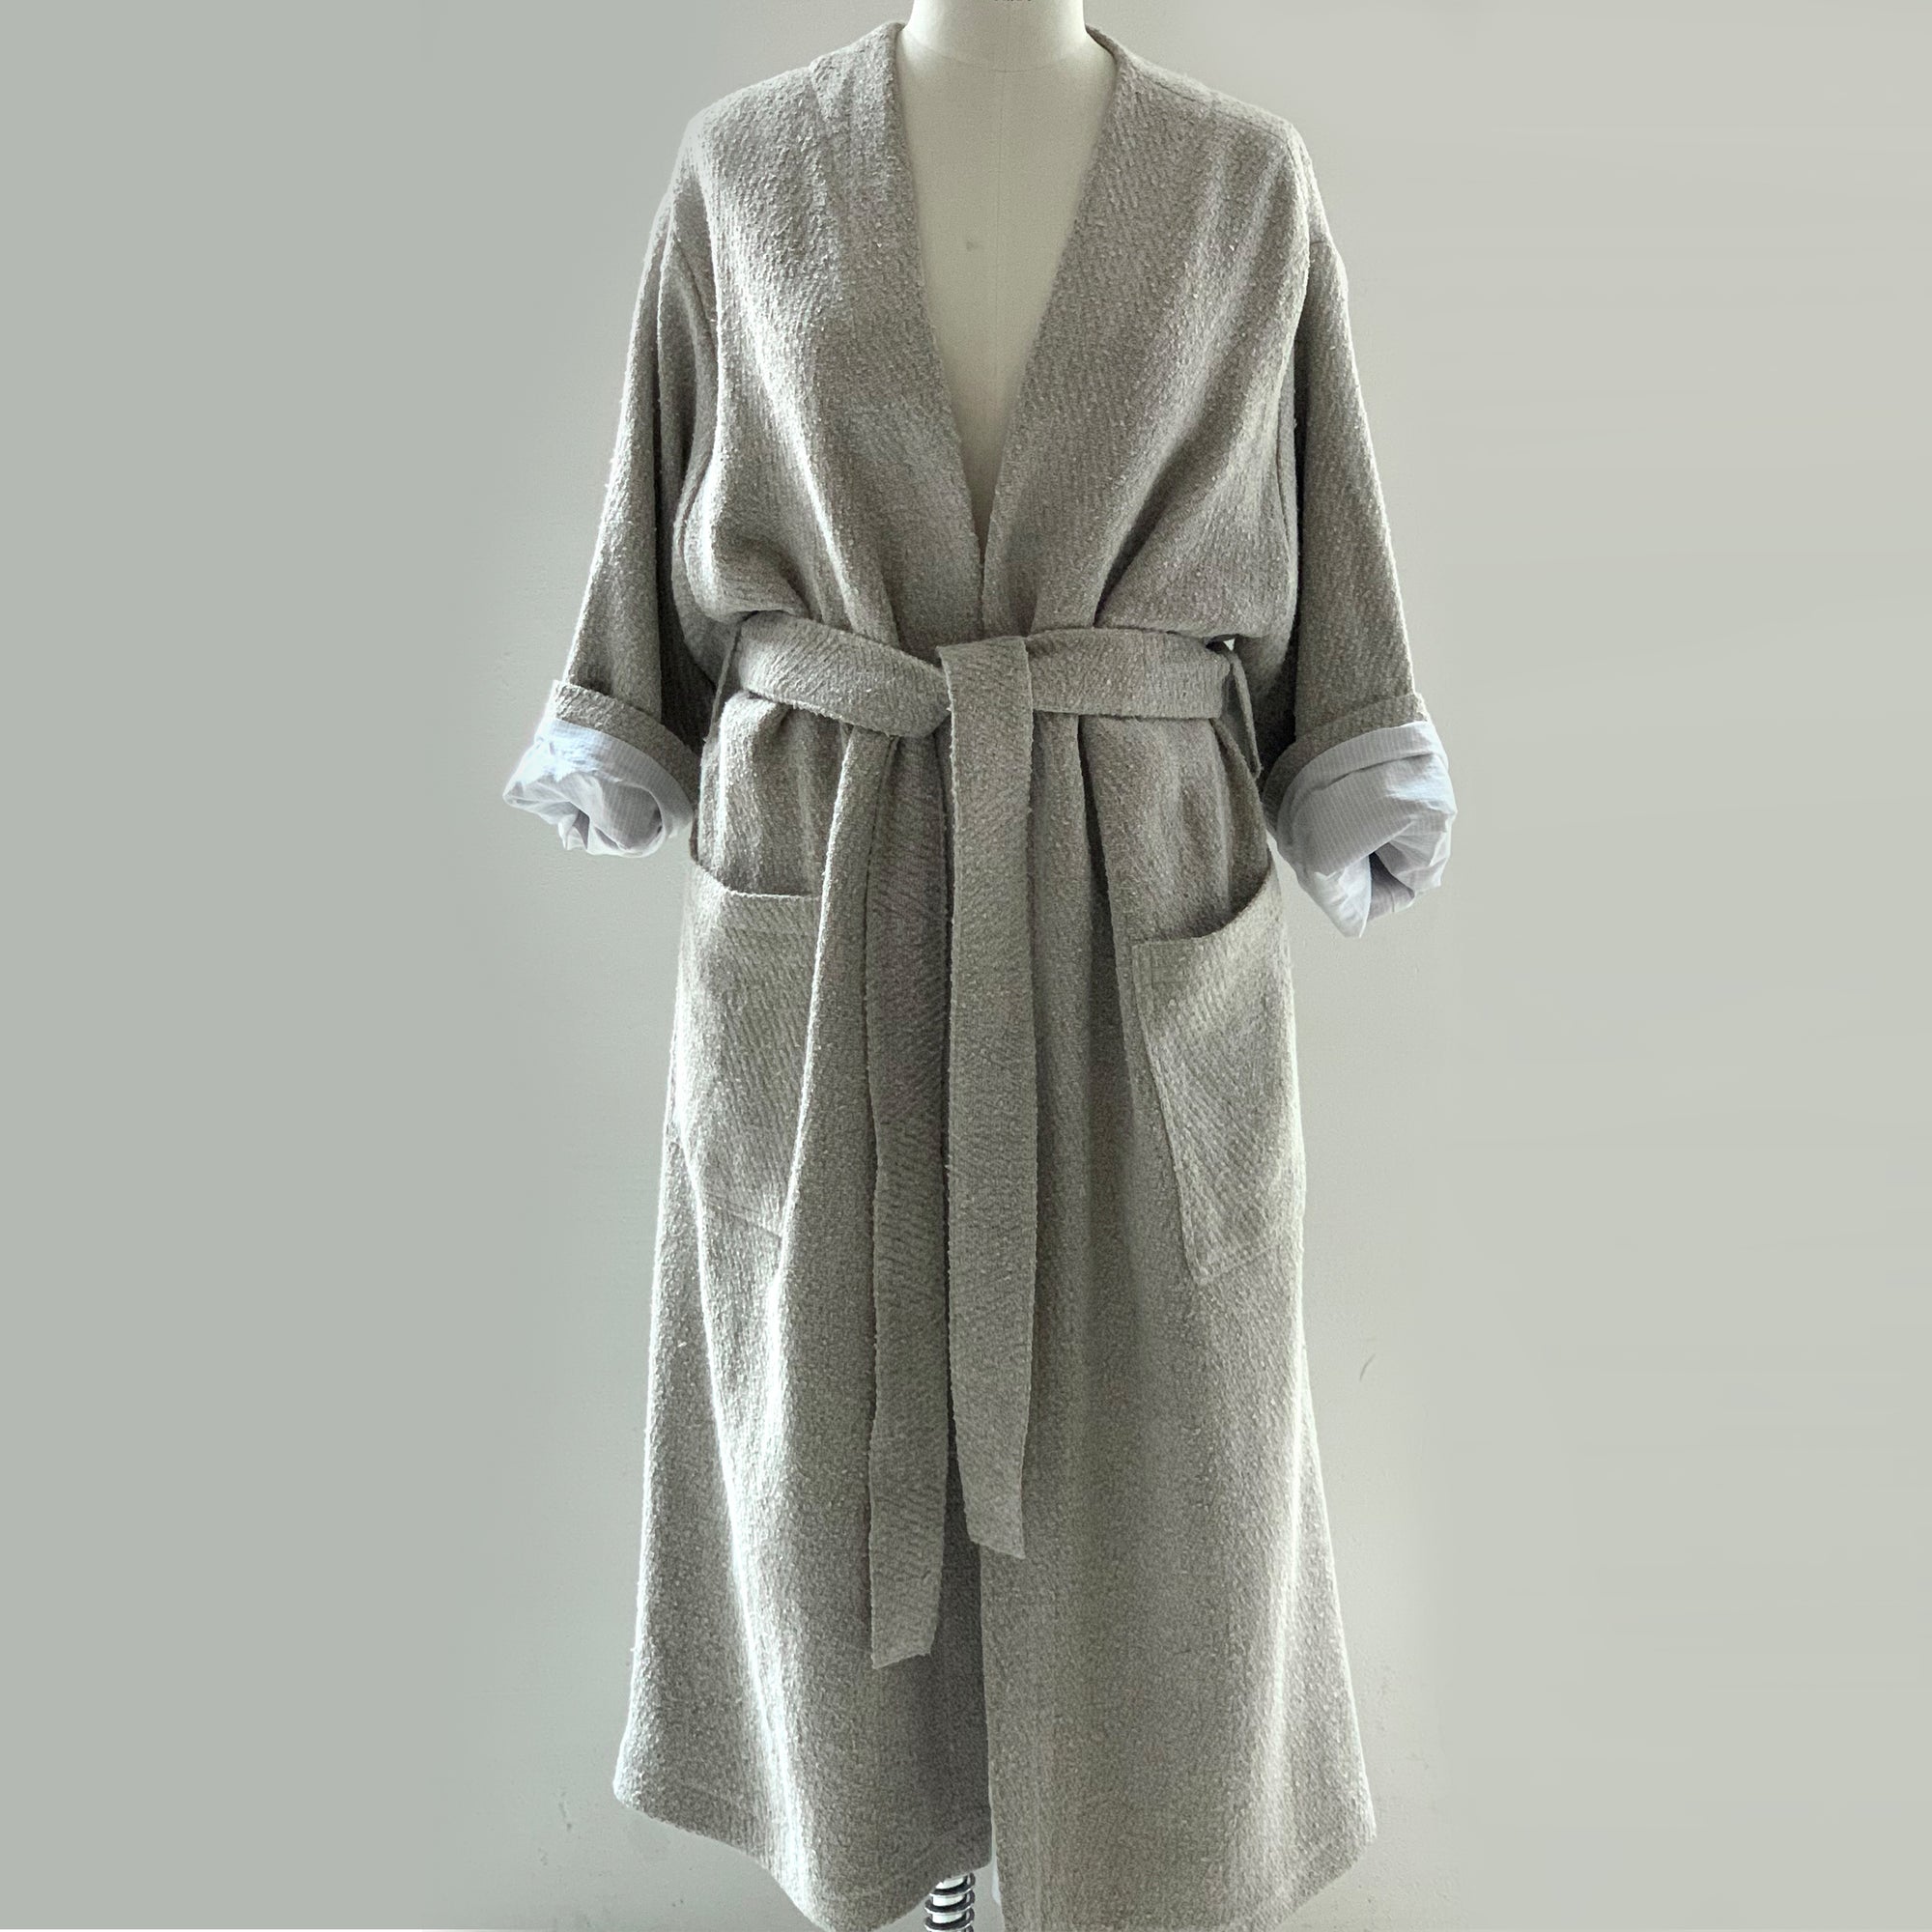 Long boucle linen bathrobe in natural, size M